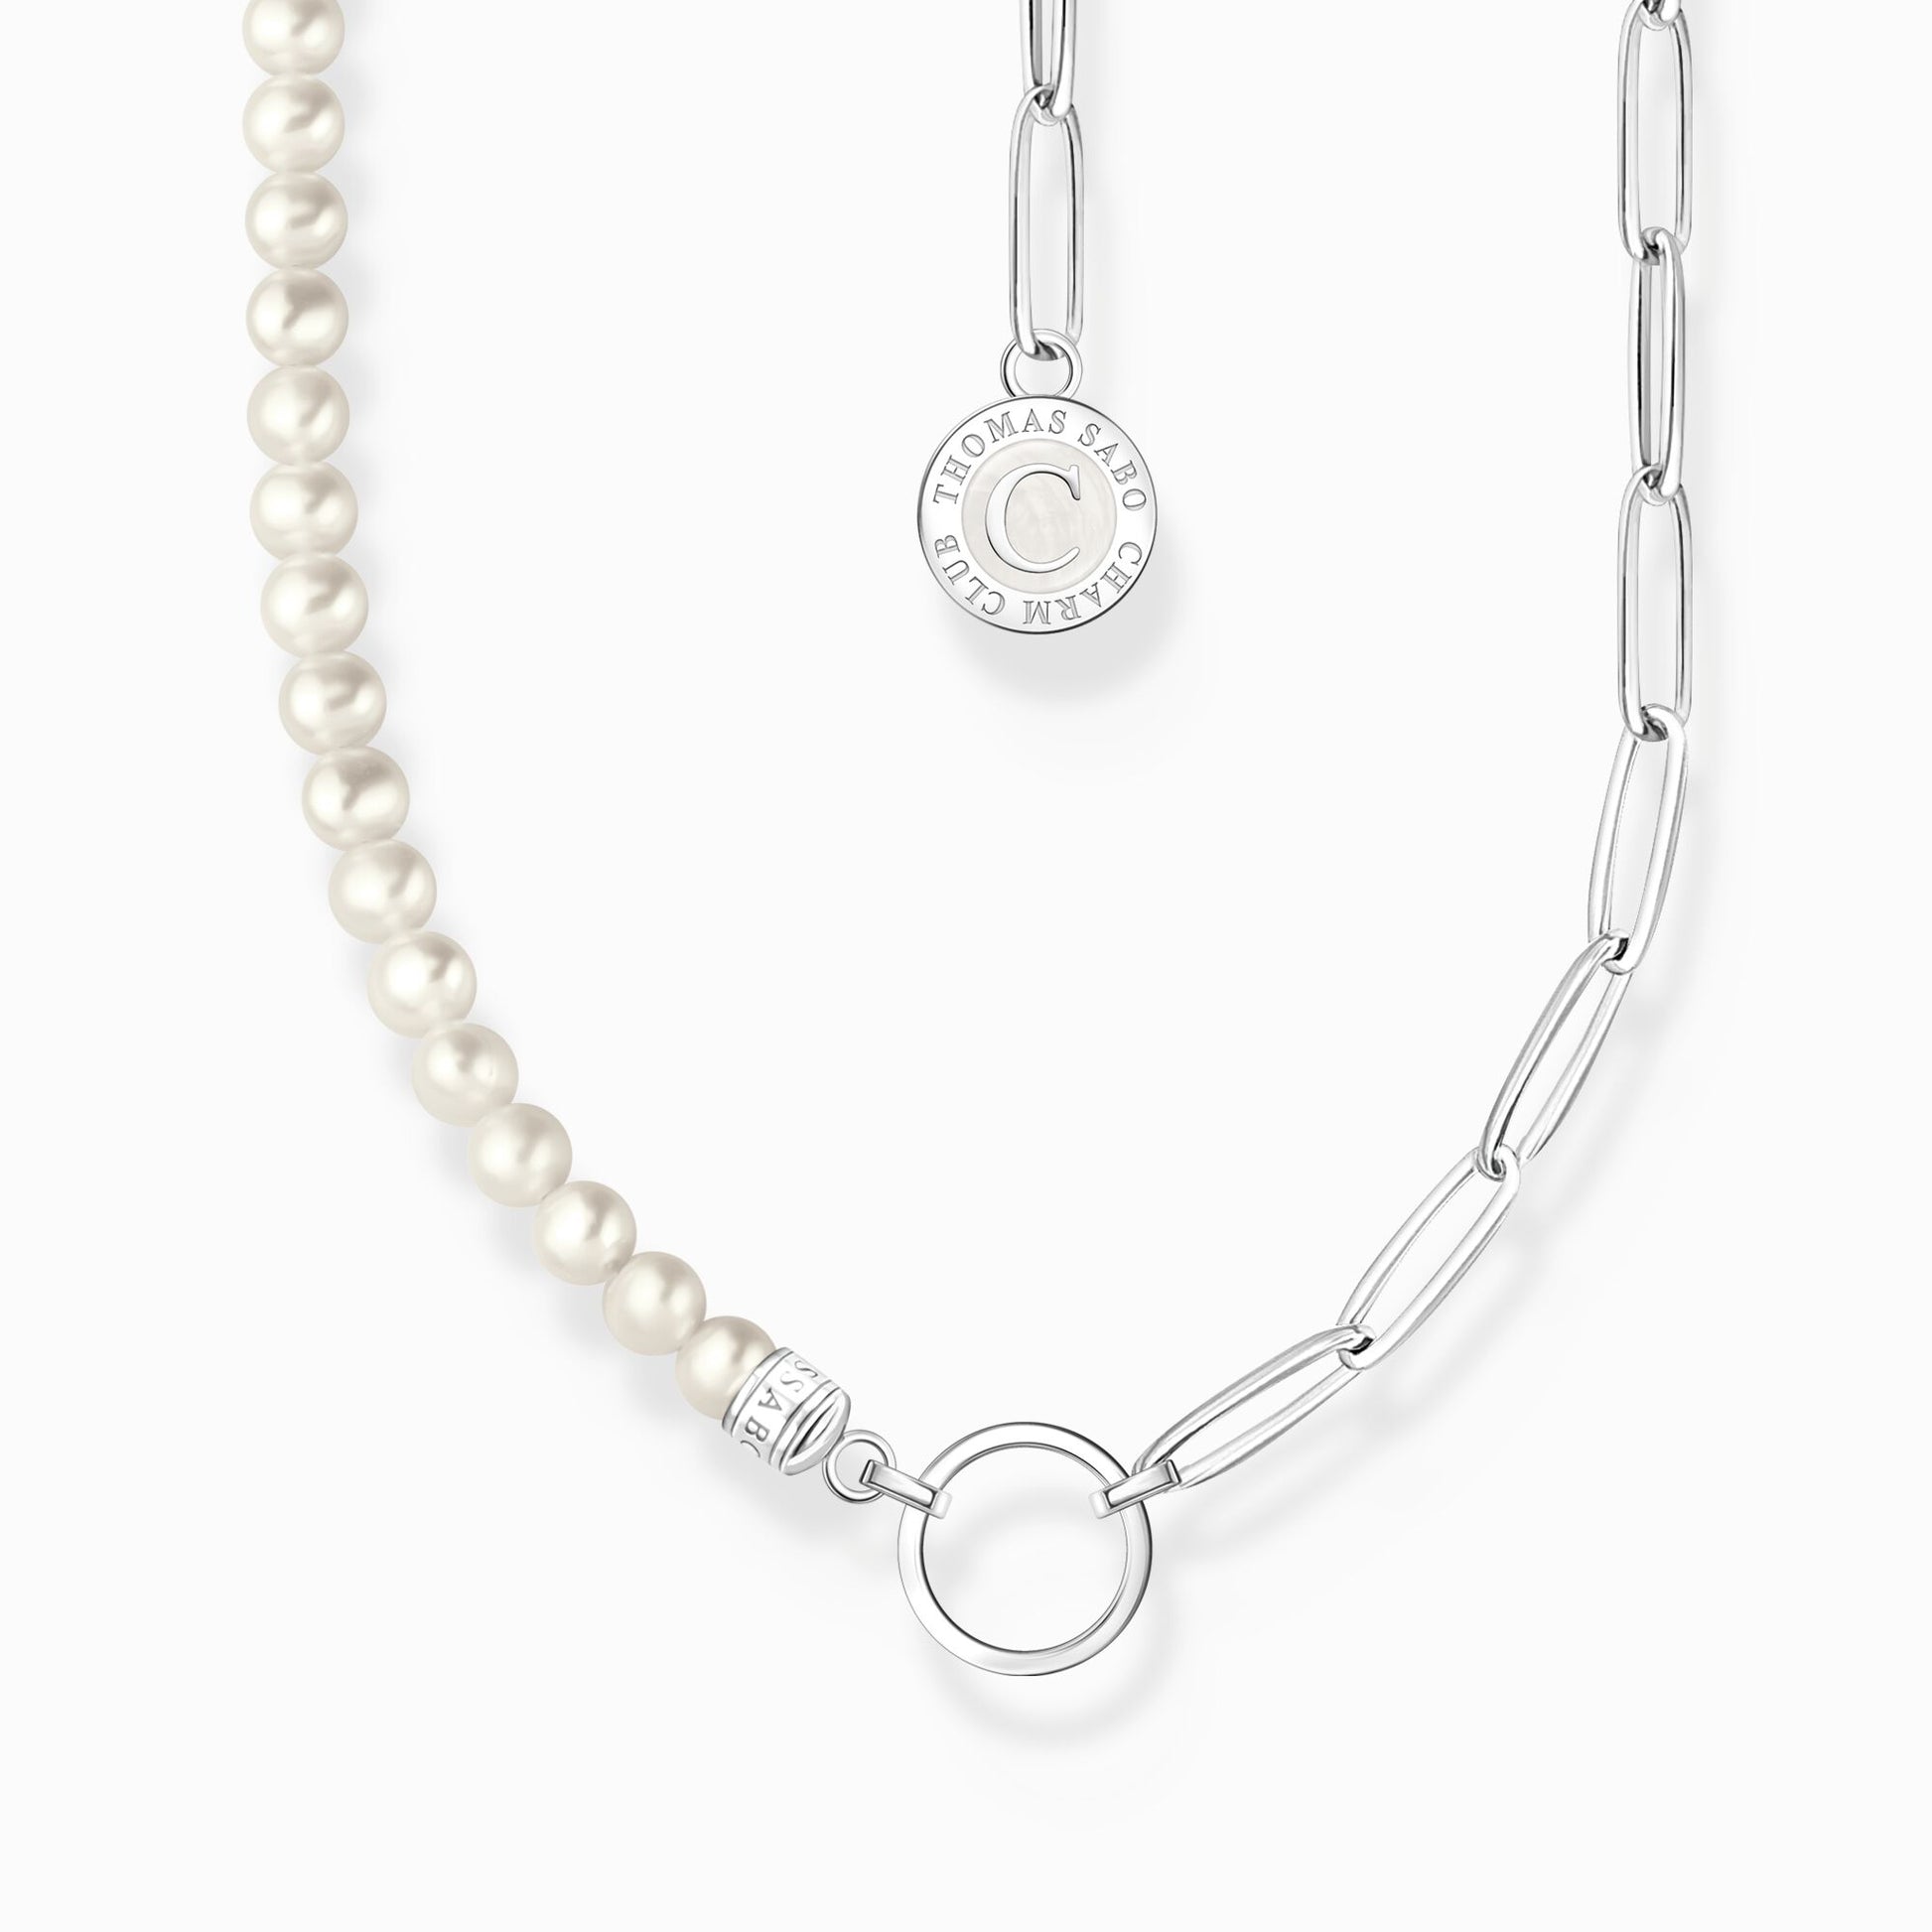 Thomas Sabo Pearl Bead Charm Necklace | Peter Jackson the Jeweller